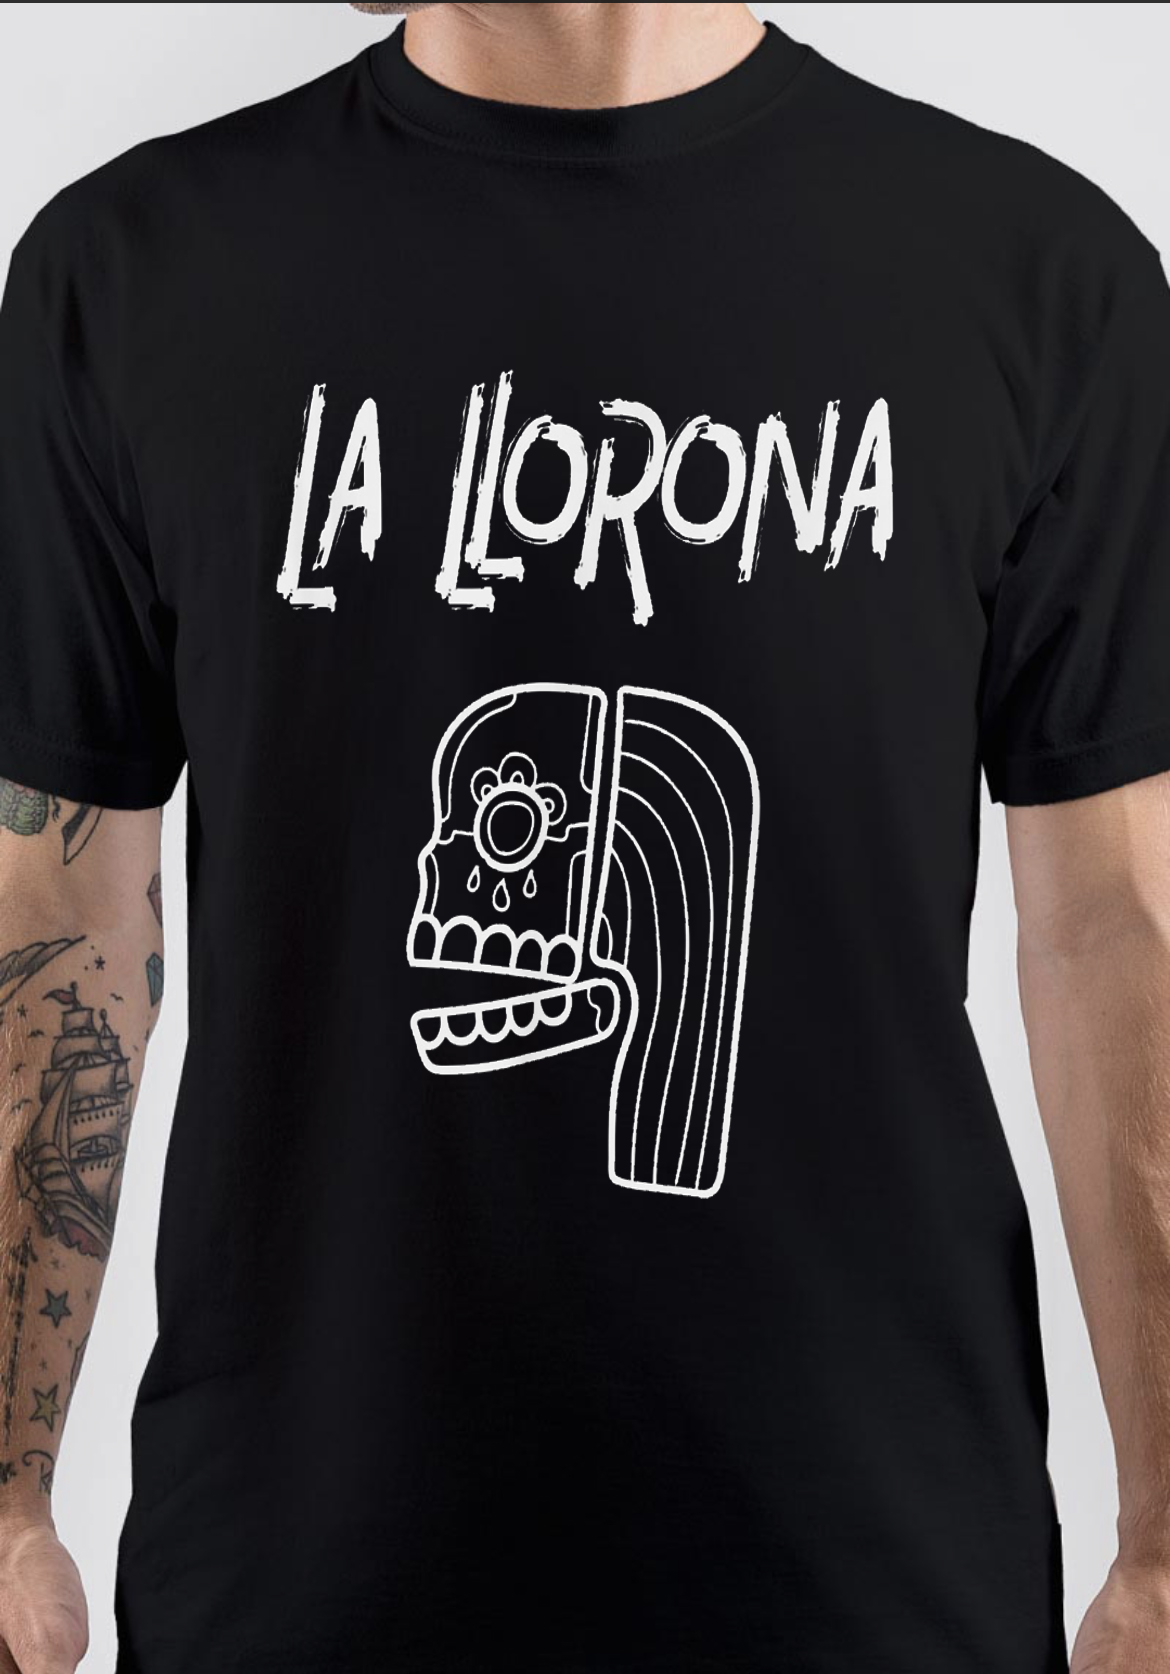 La Llorona T-Shirt And Merchandise